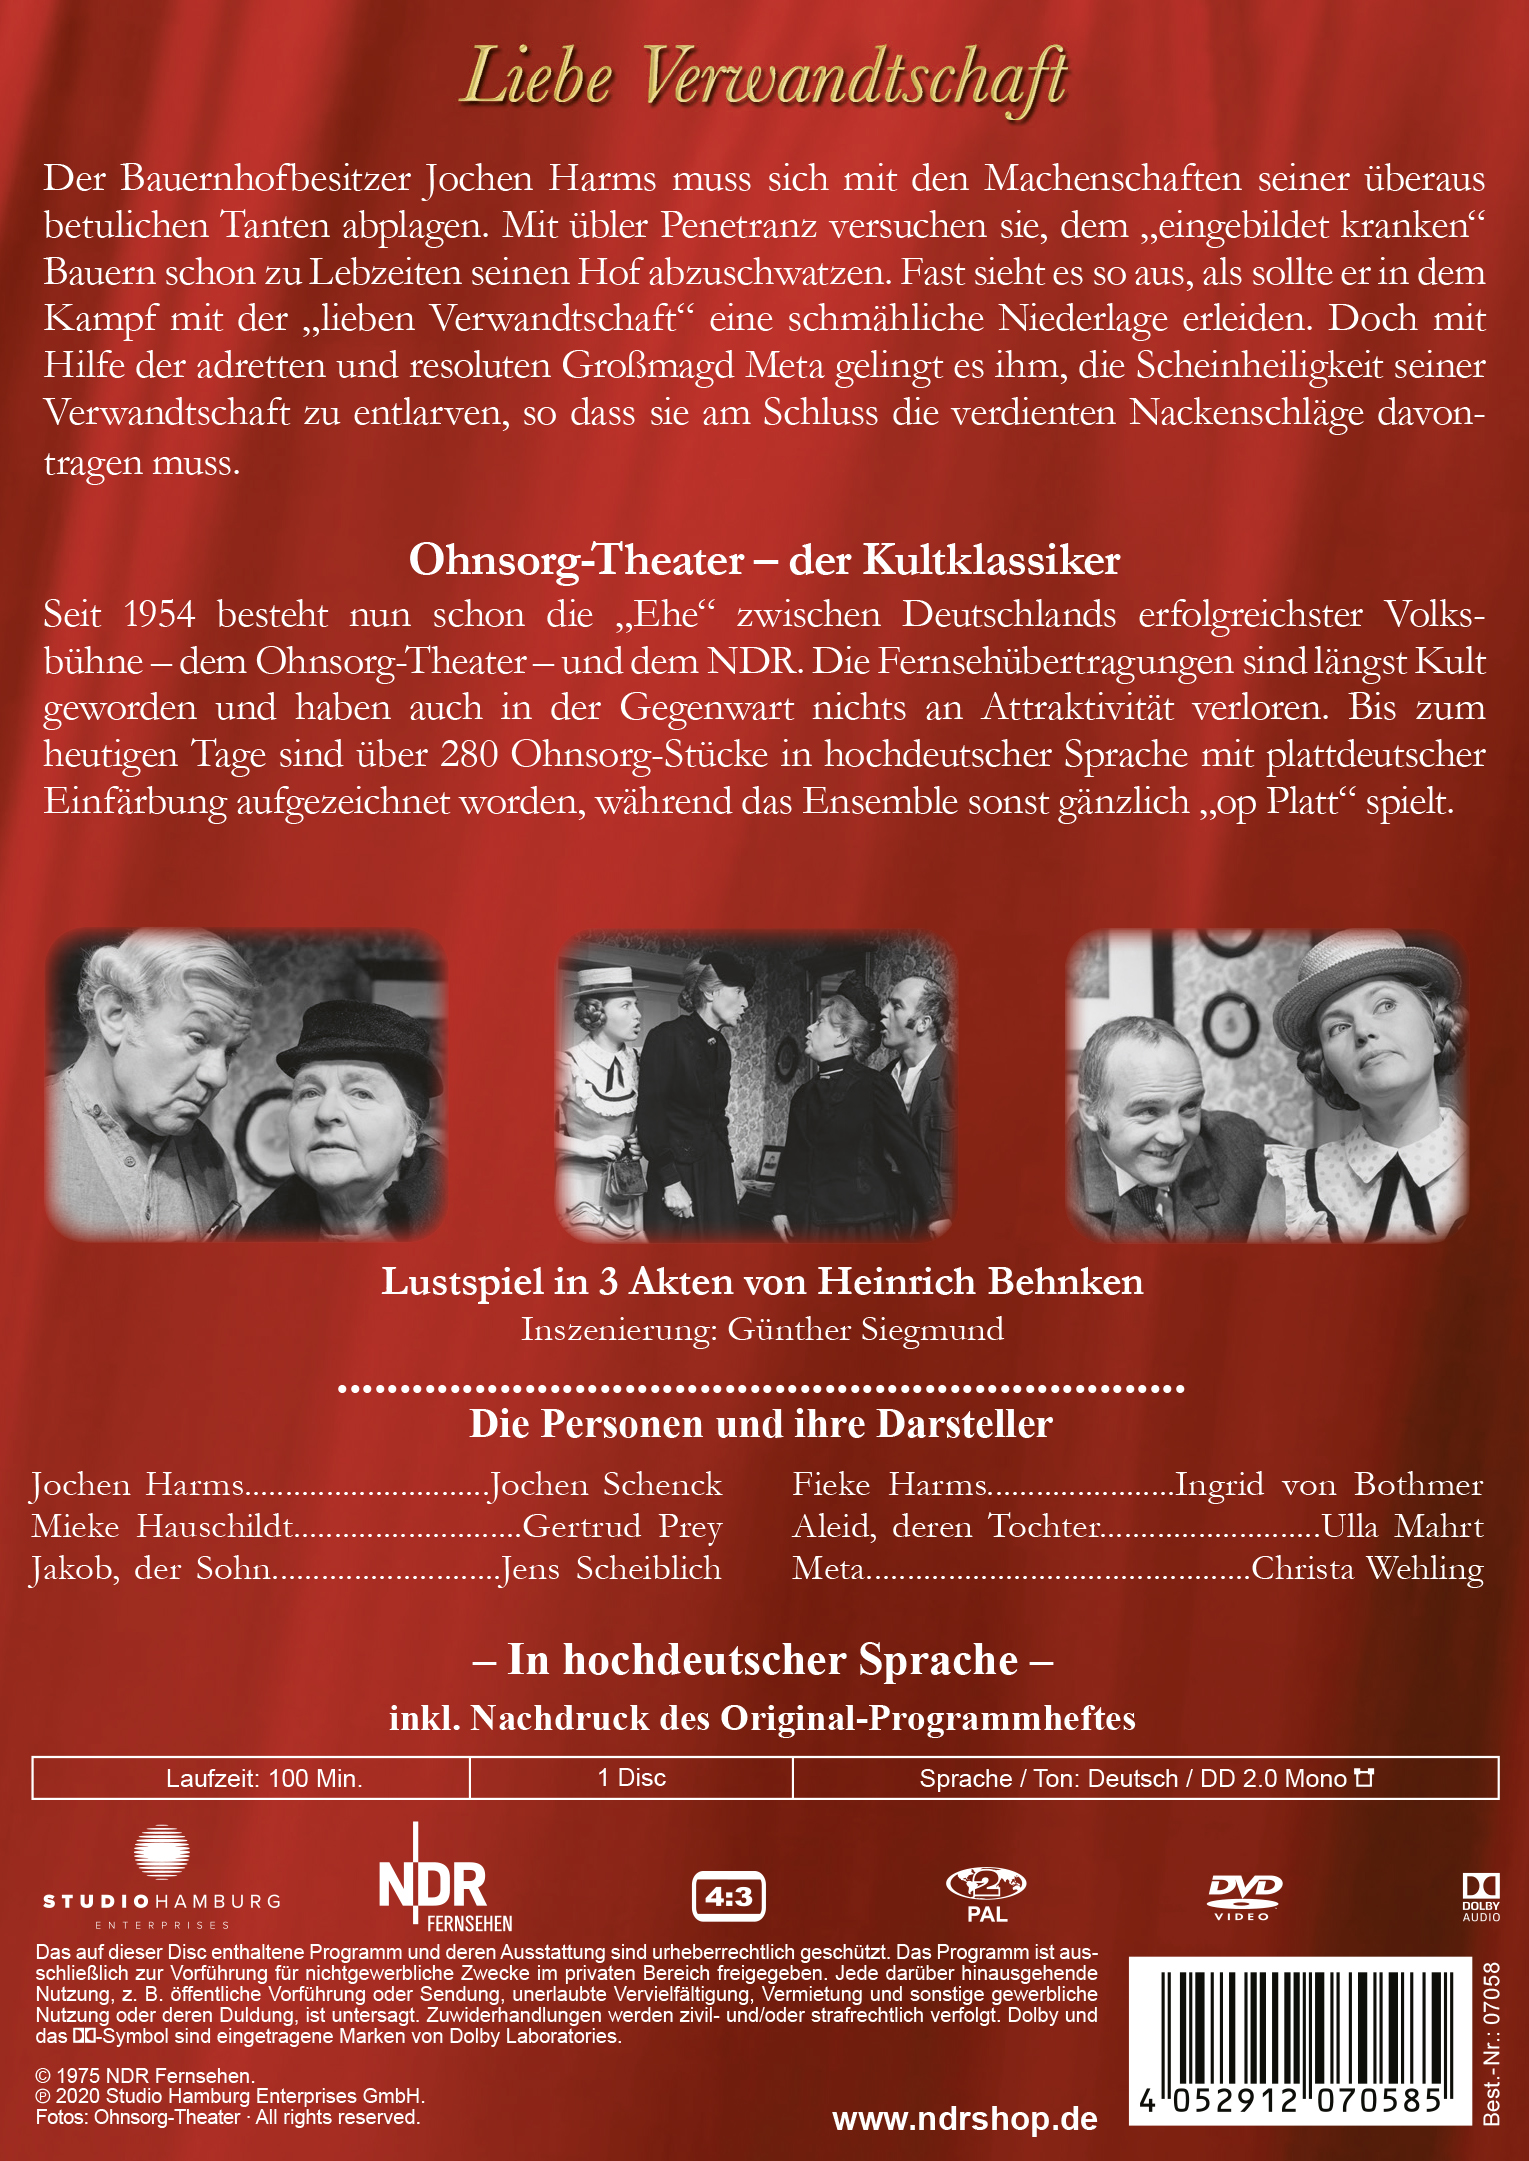 Ohnsorg-Theater DVD Klassiker: Liebe Verwandtschaft